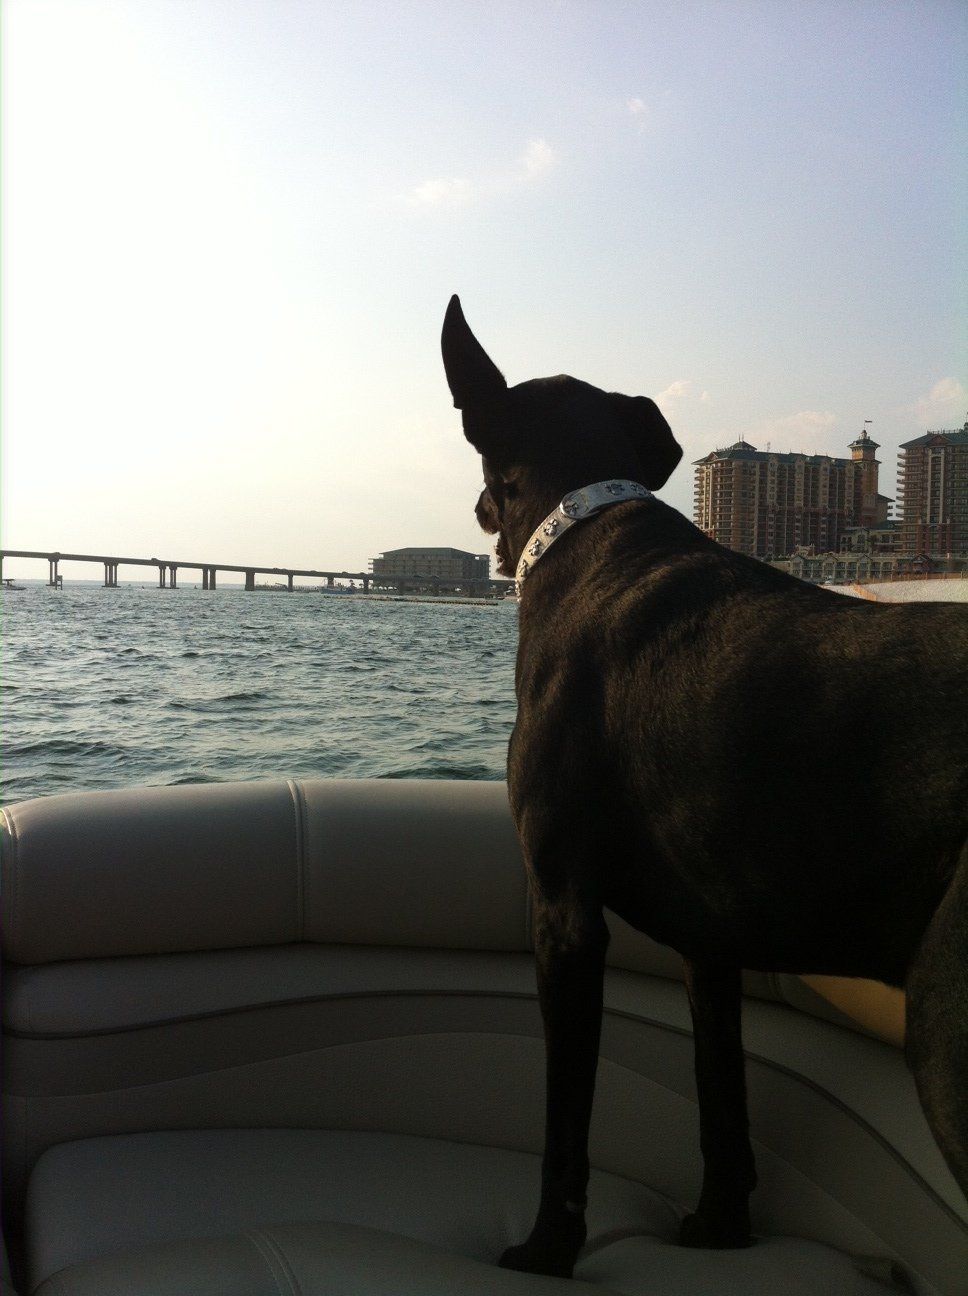 Black labrador standing in pontoon boat